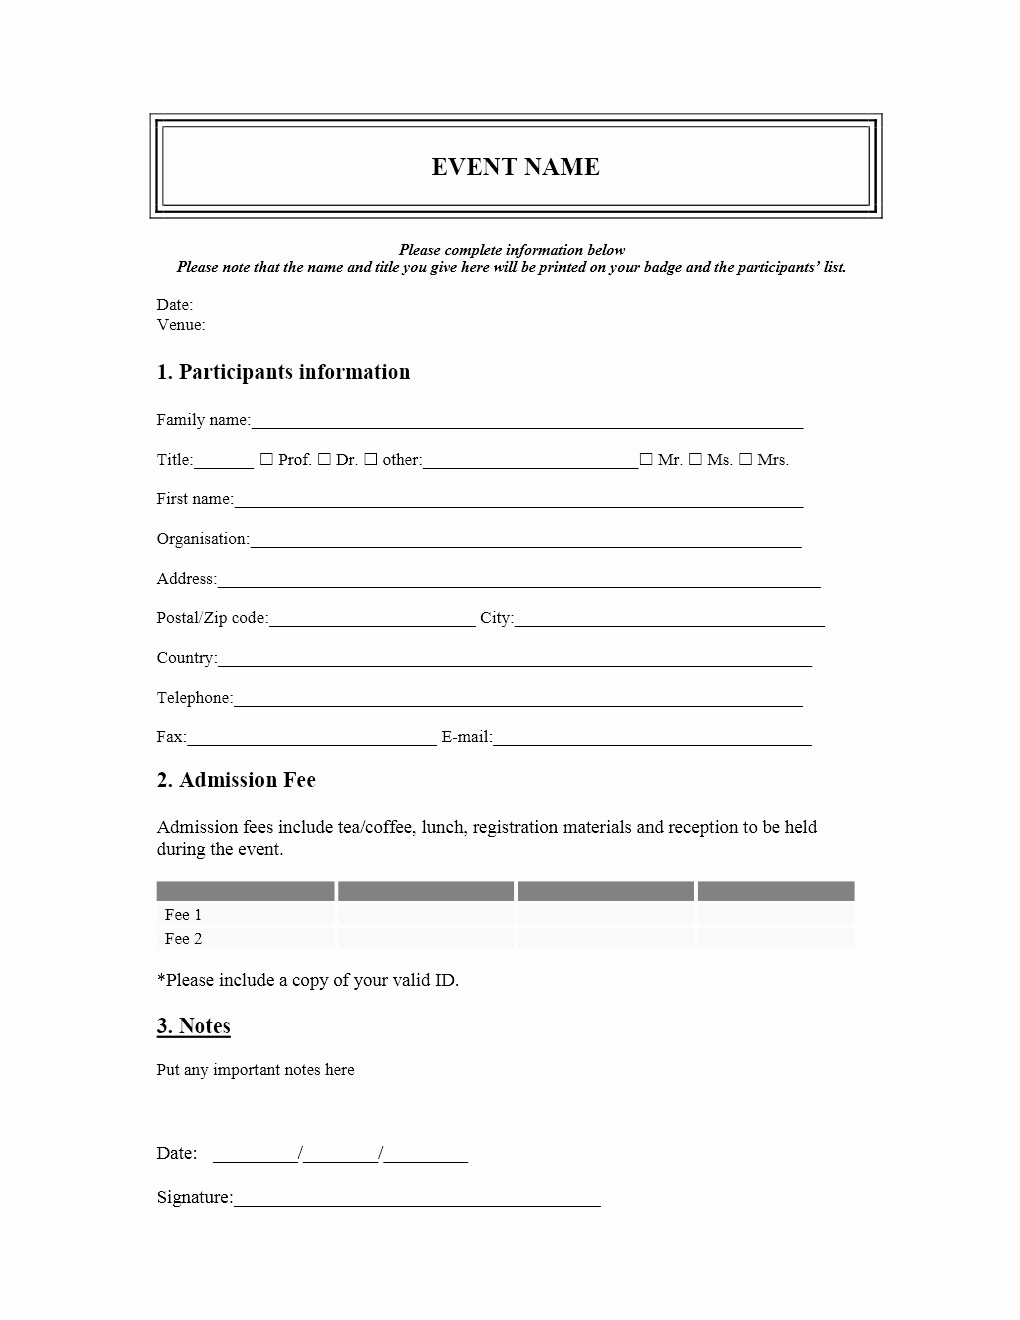 Registration form Template Word New event Registration form